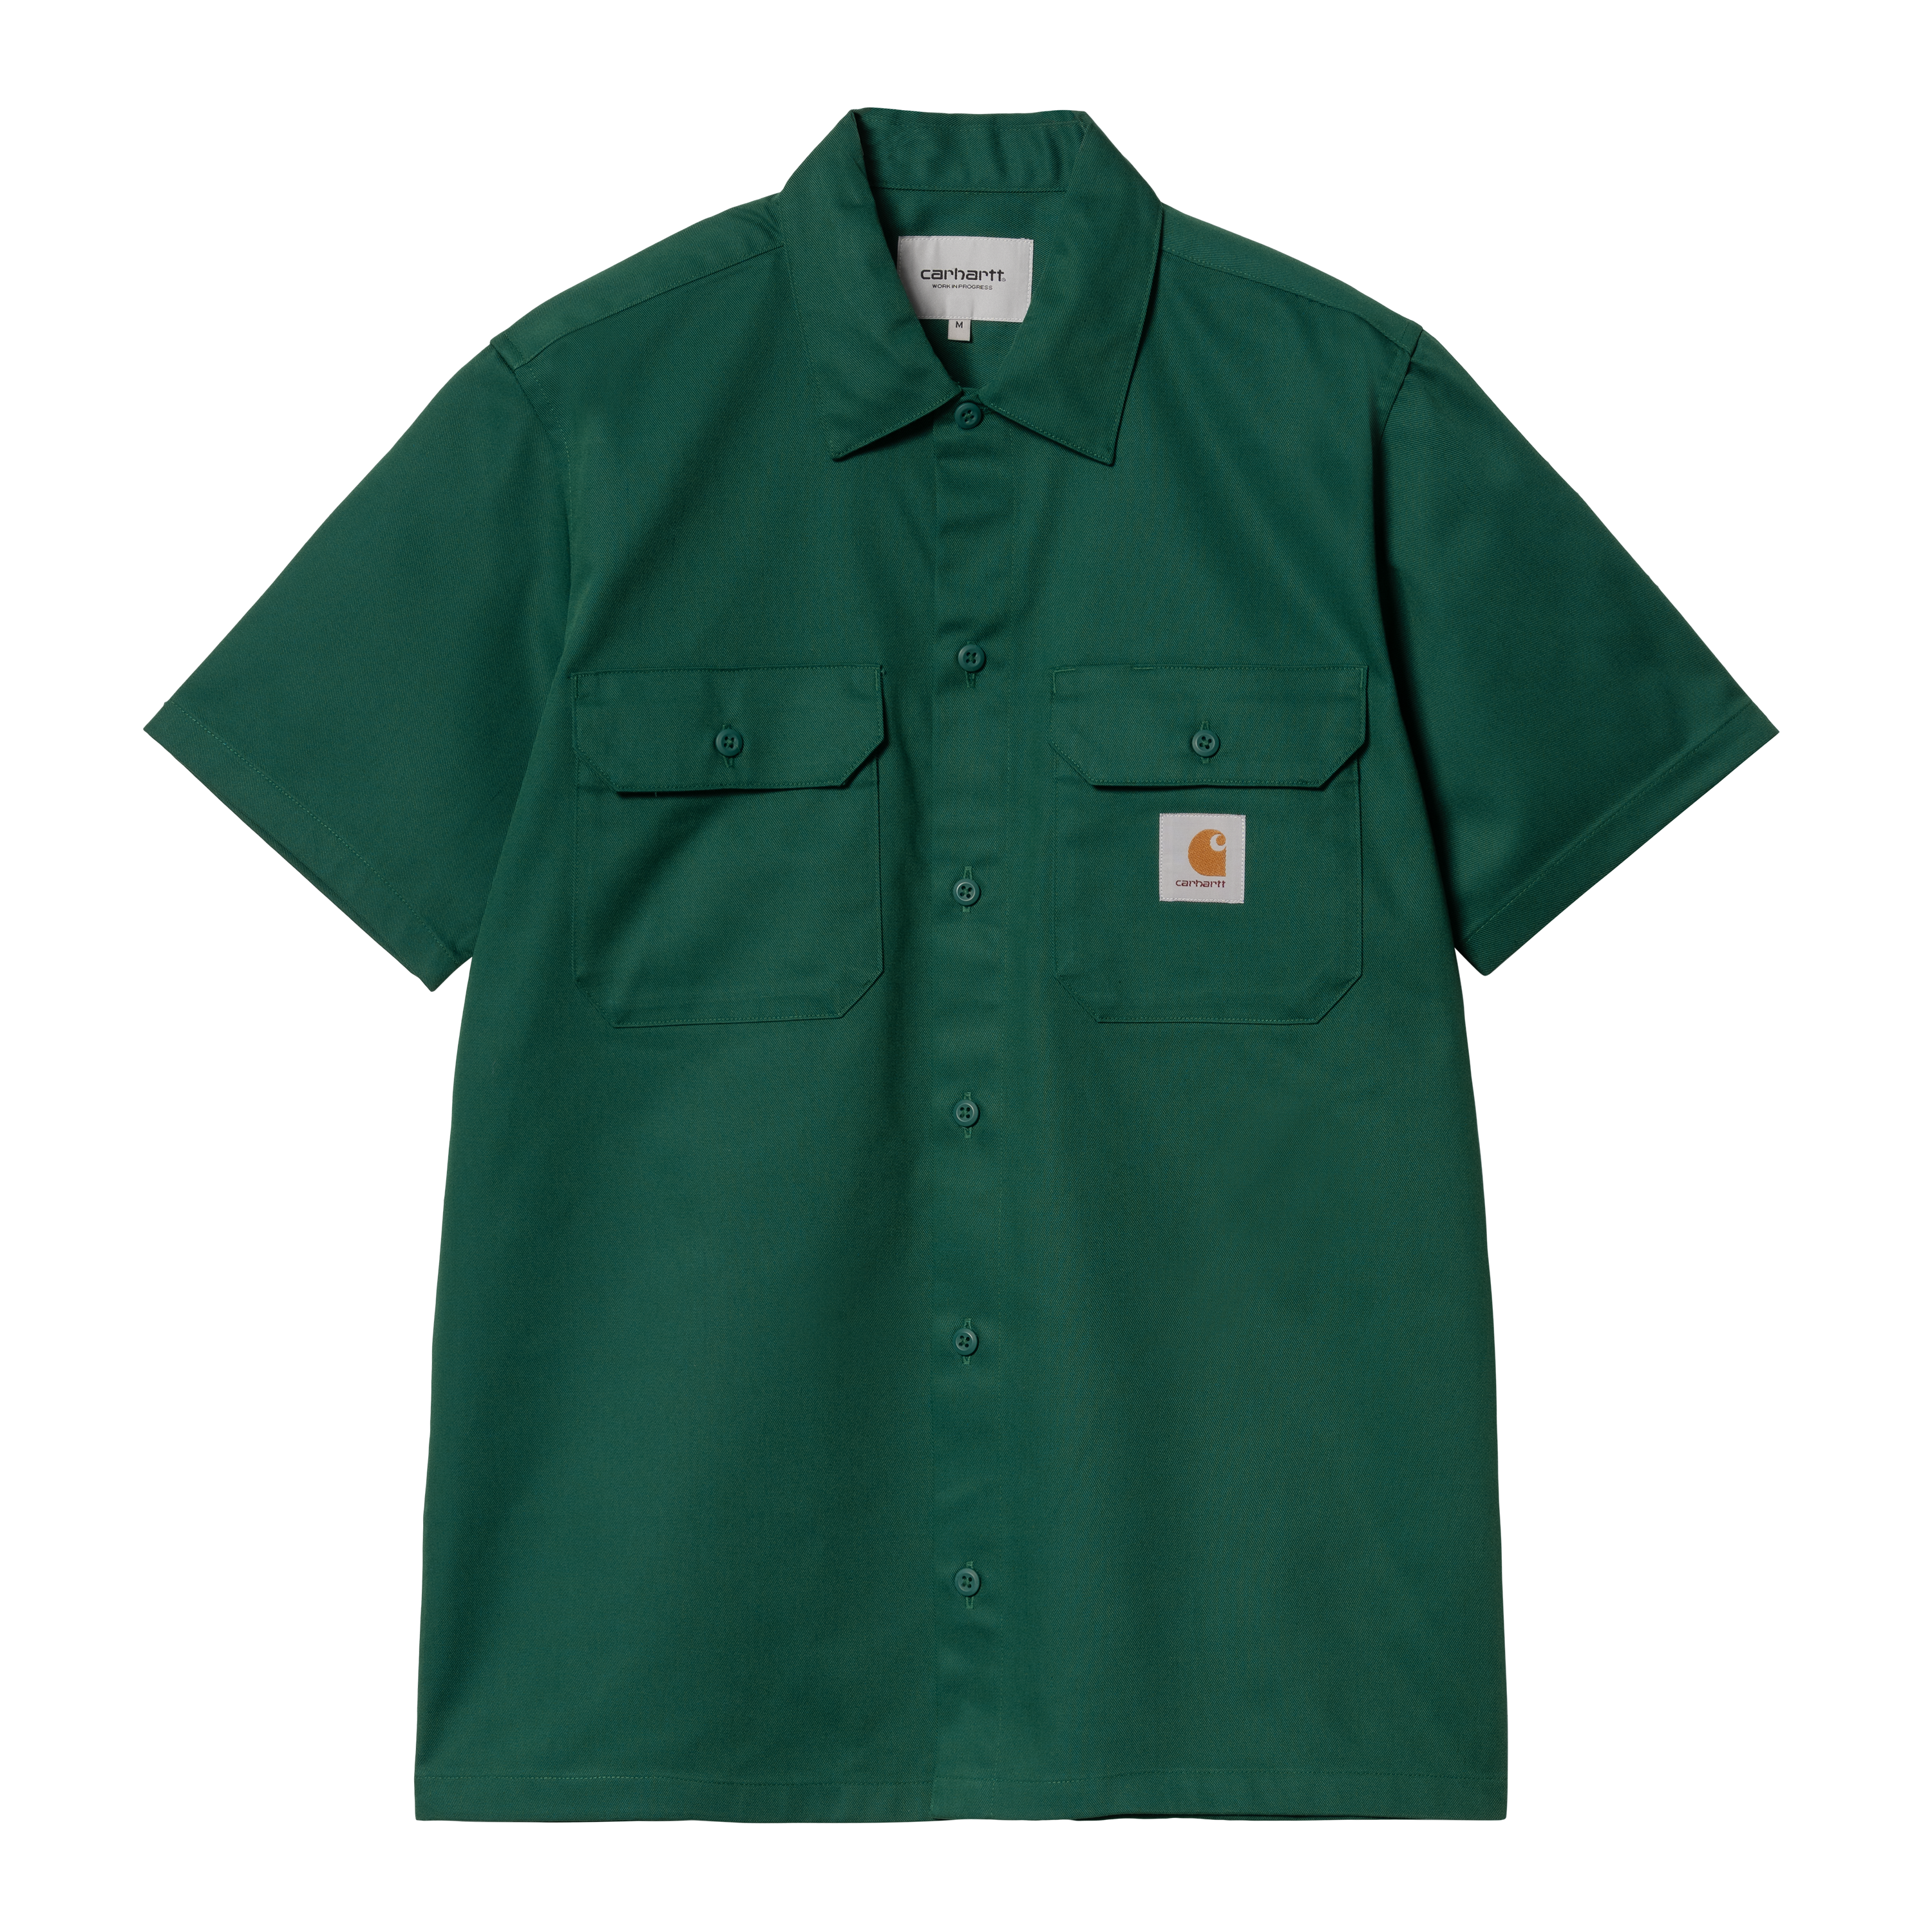 Carhartt WIP Short Sleeve Master Shirt in Green